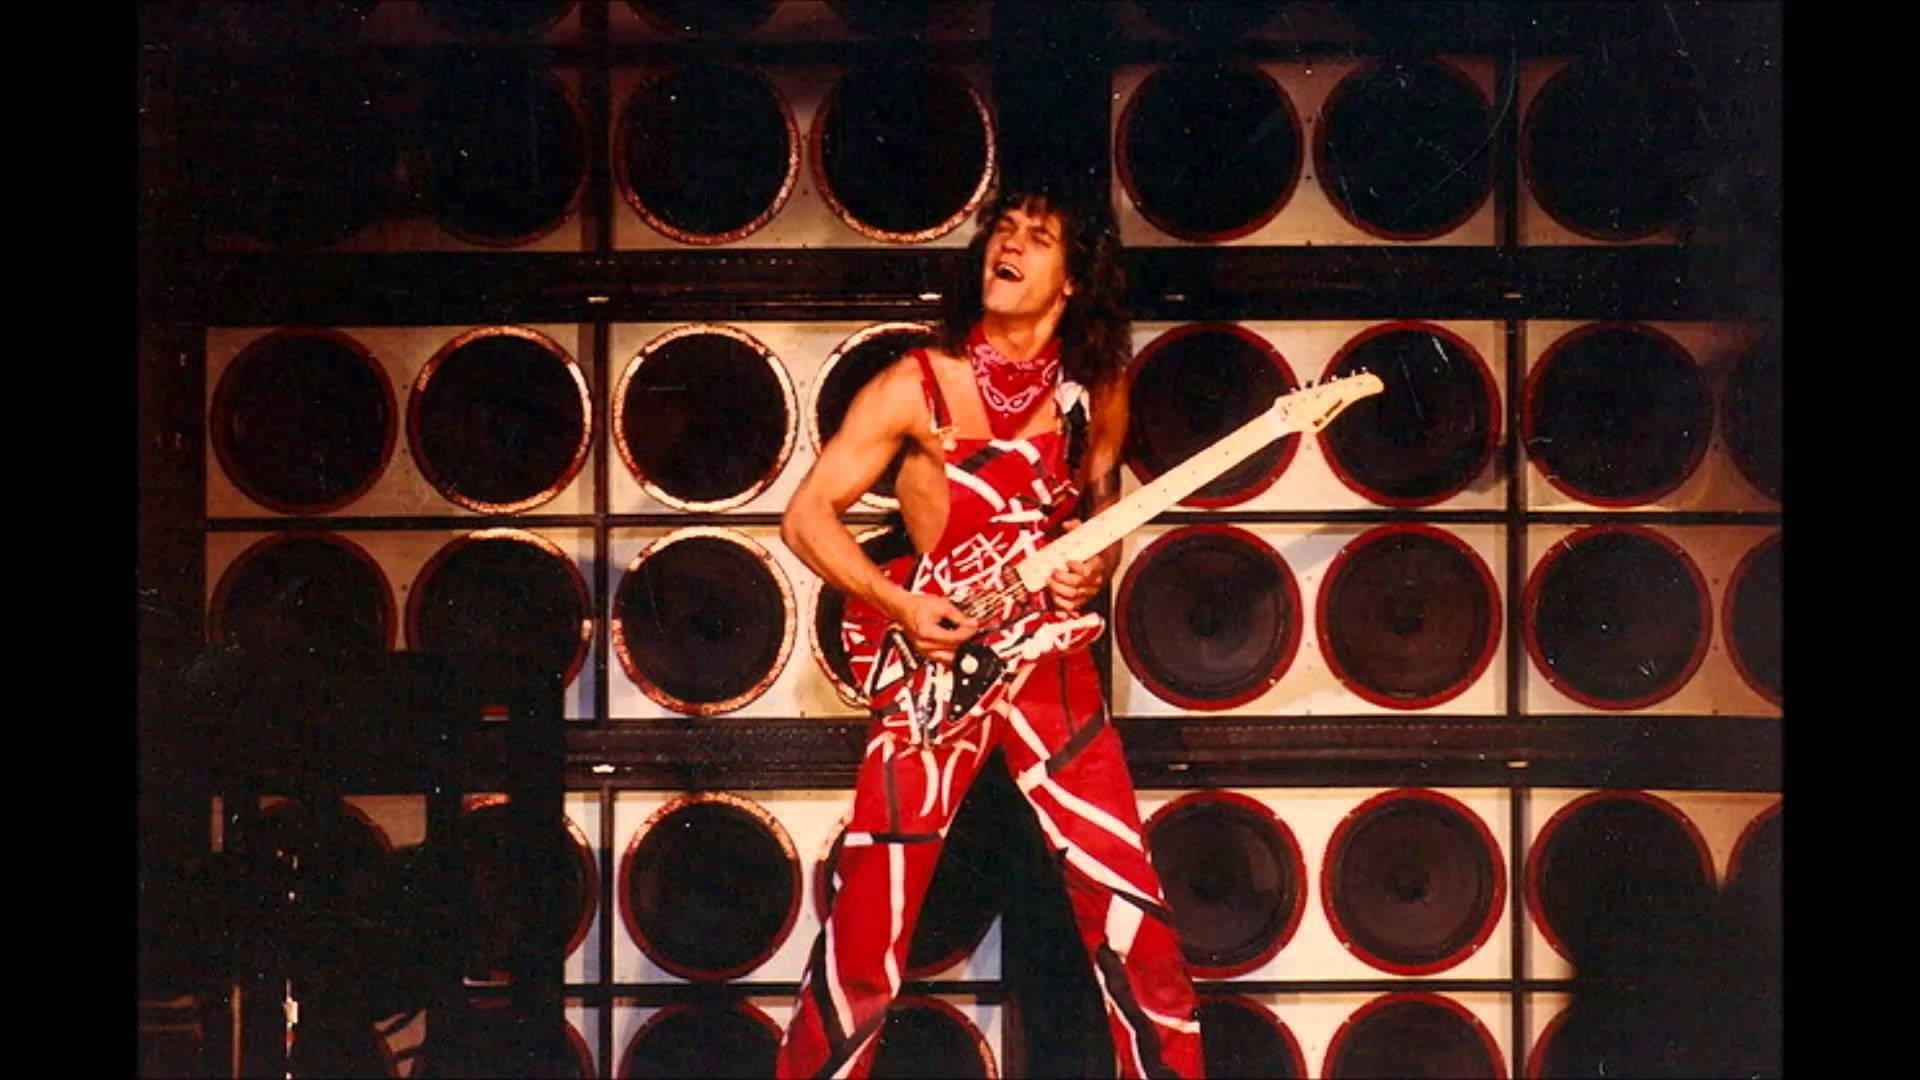 Eddievan Halen Rock Band - Retro: Eddie Van Halen Gruppo Rock Retrò Sfondo